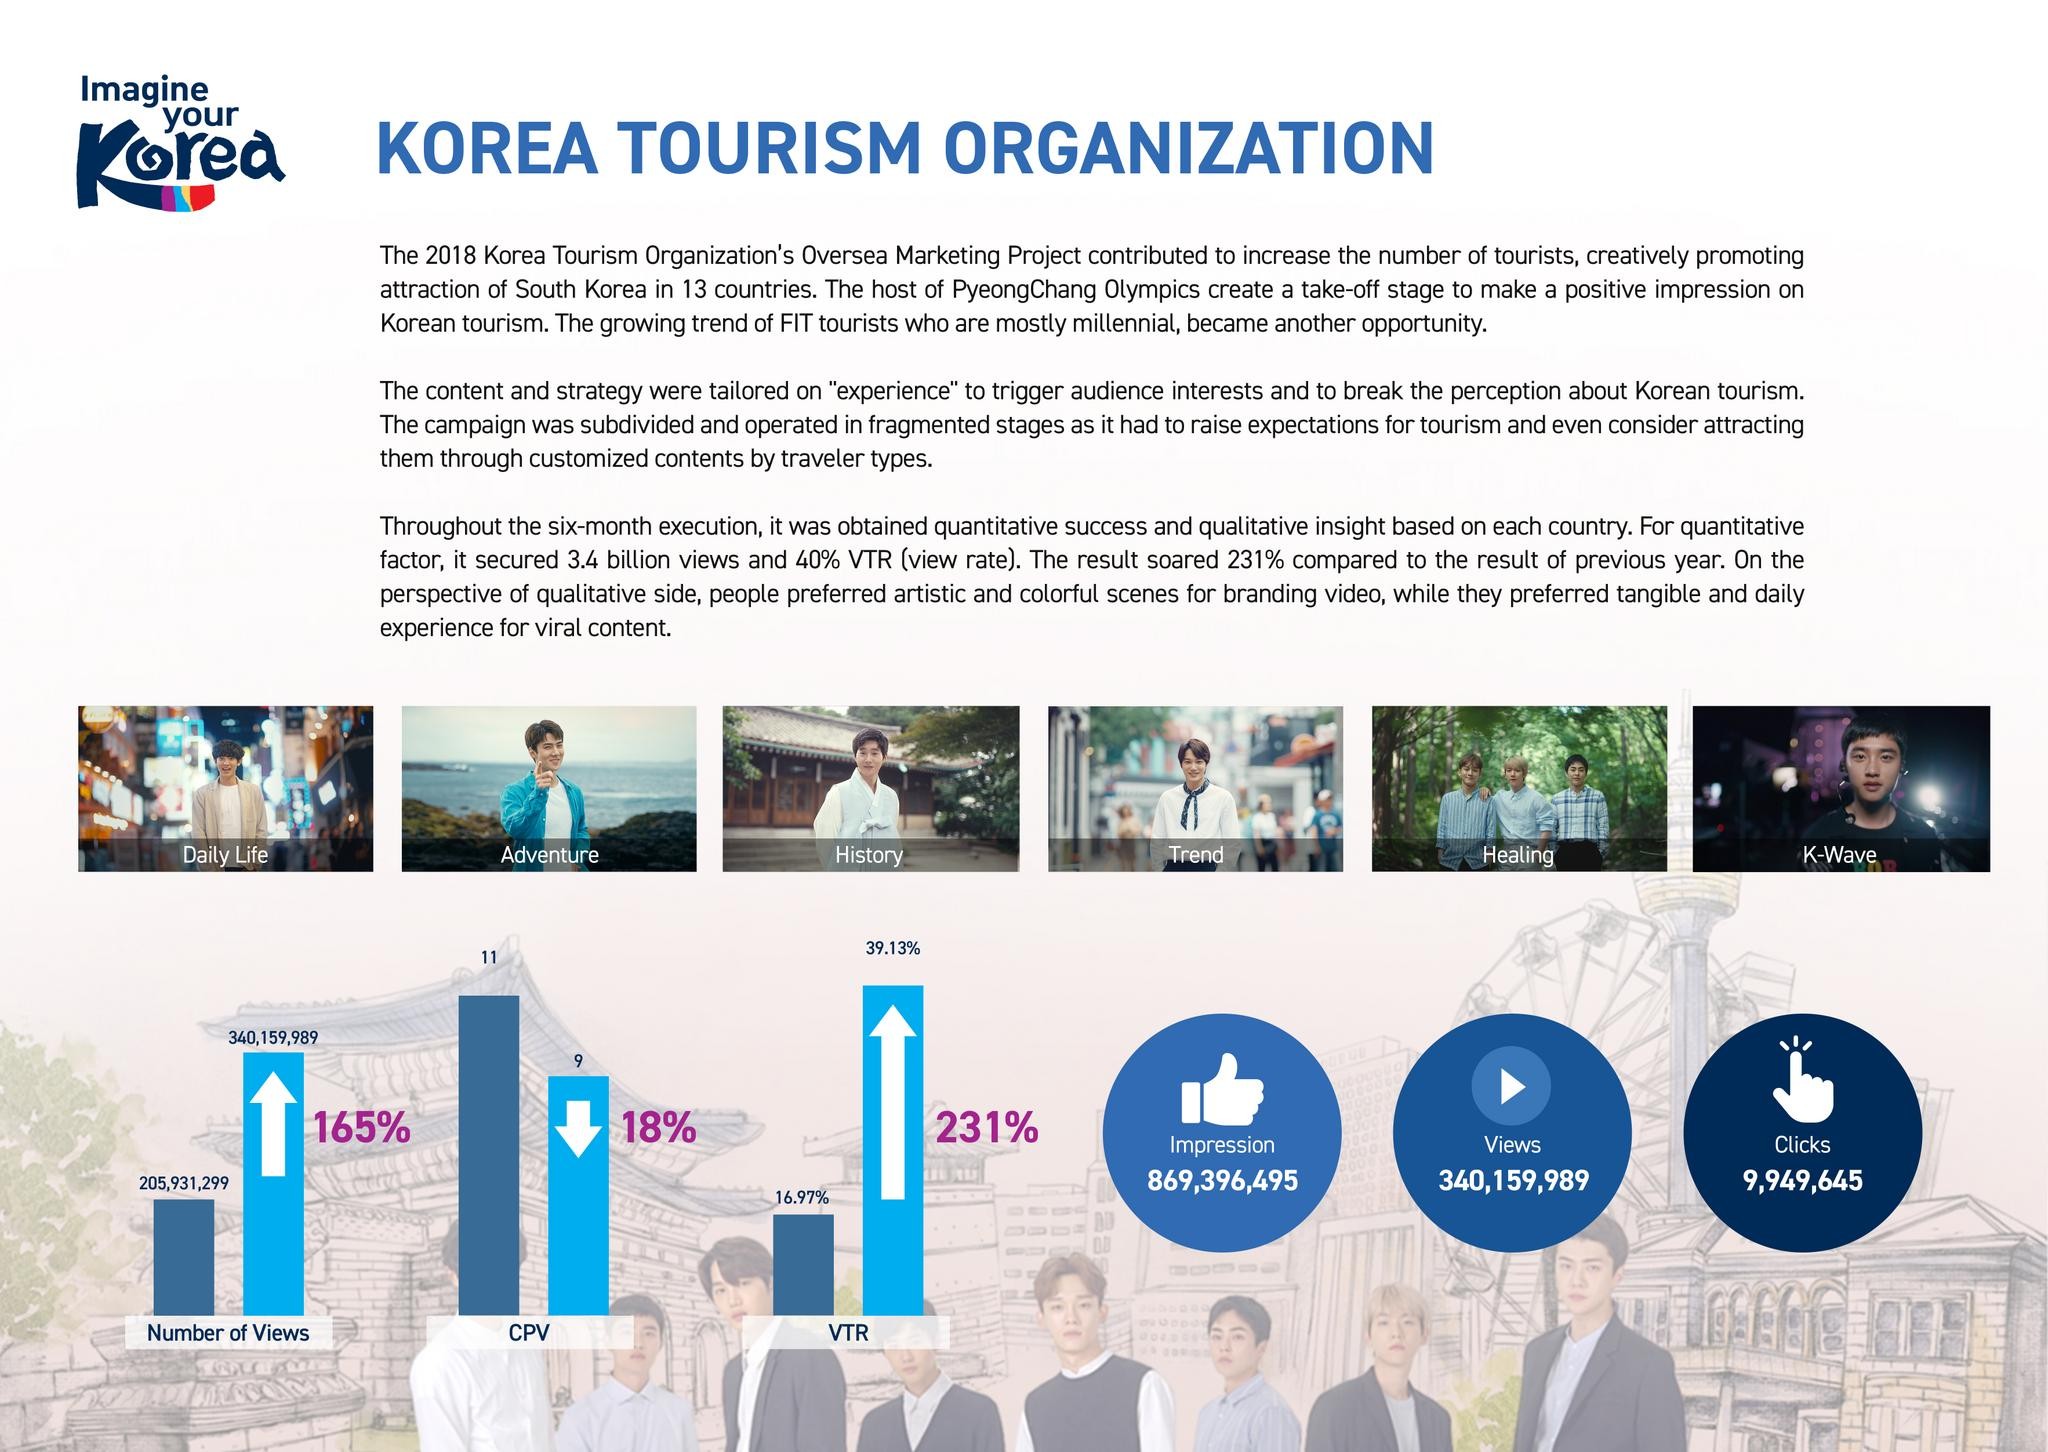 Korea Tourism Organization's Global Paid Media Campaign